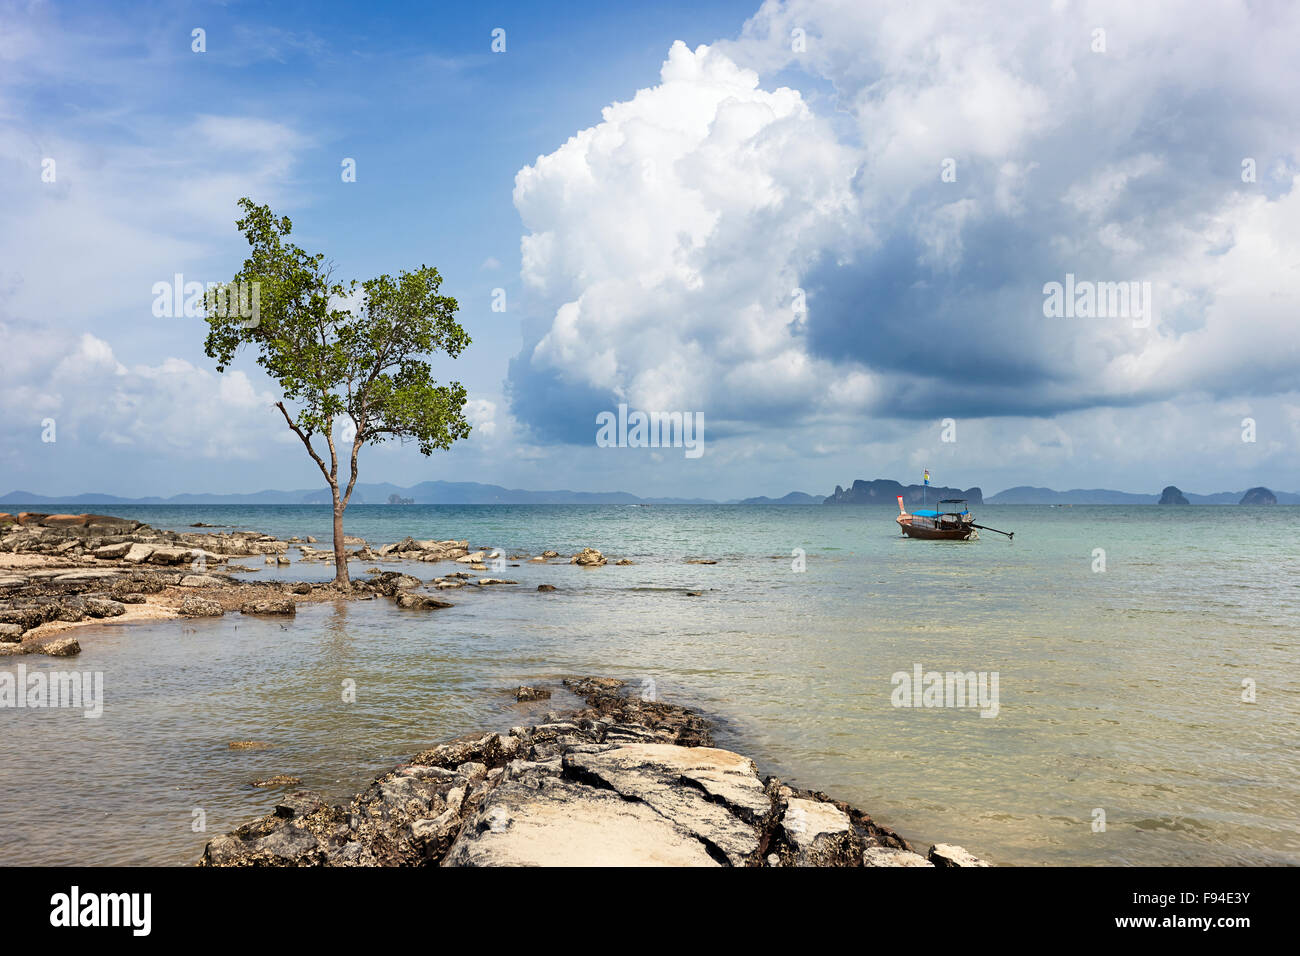 Klong Muang Beach, Krabi Province, Thailand. Stock Photo